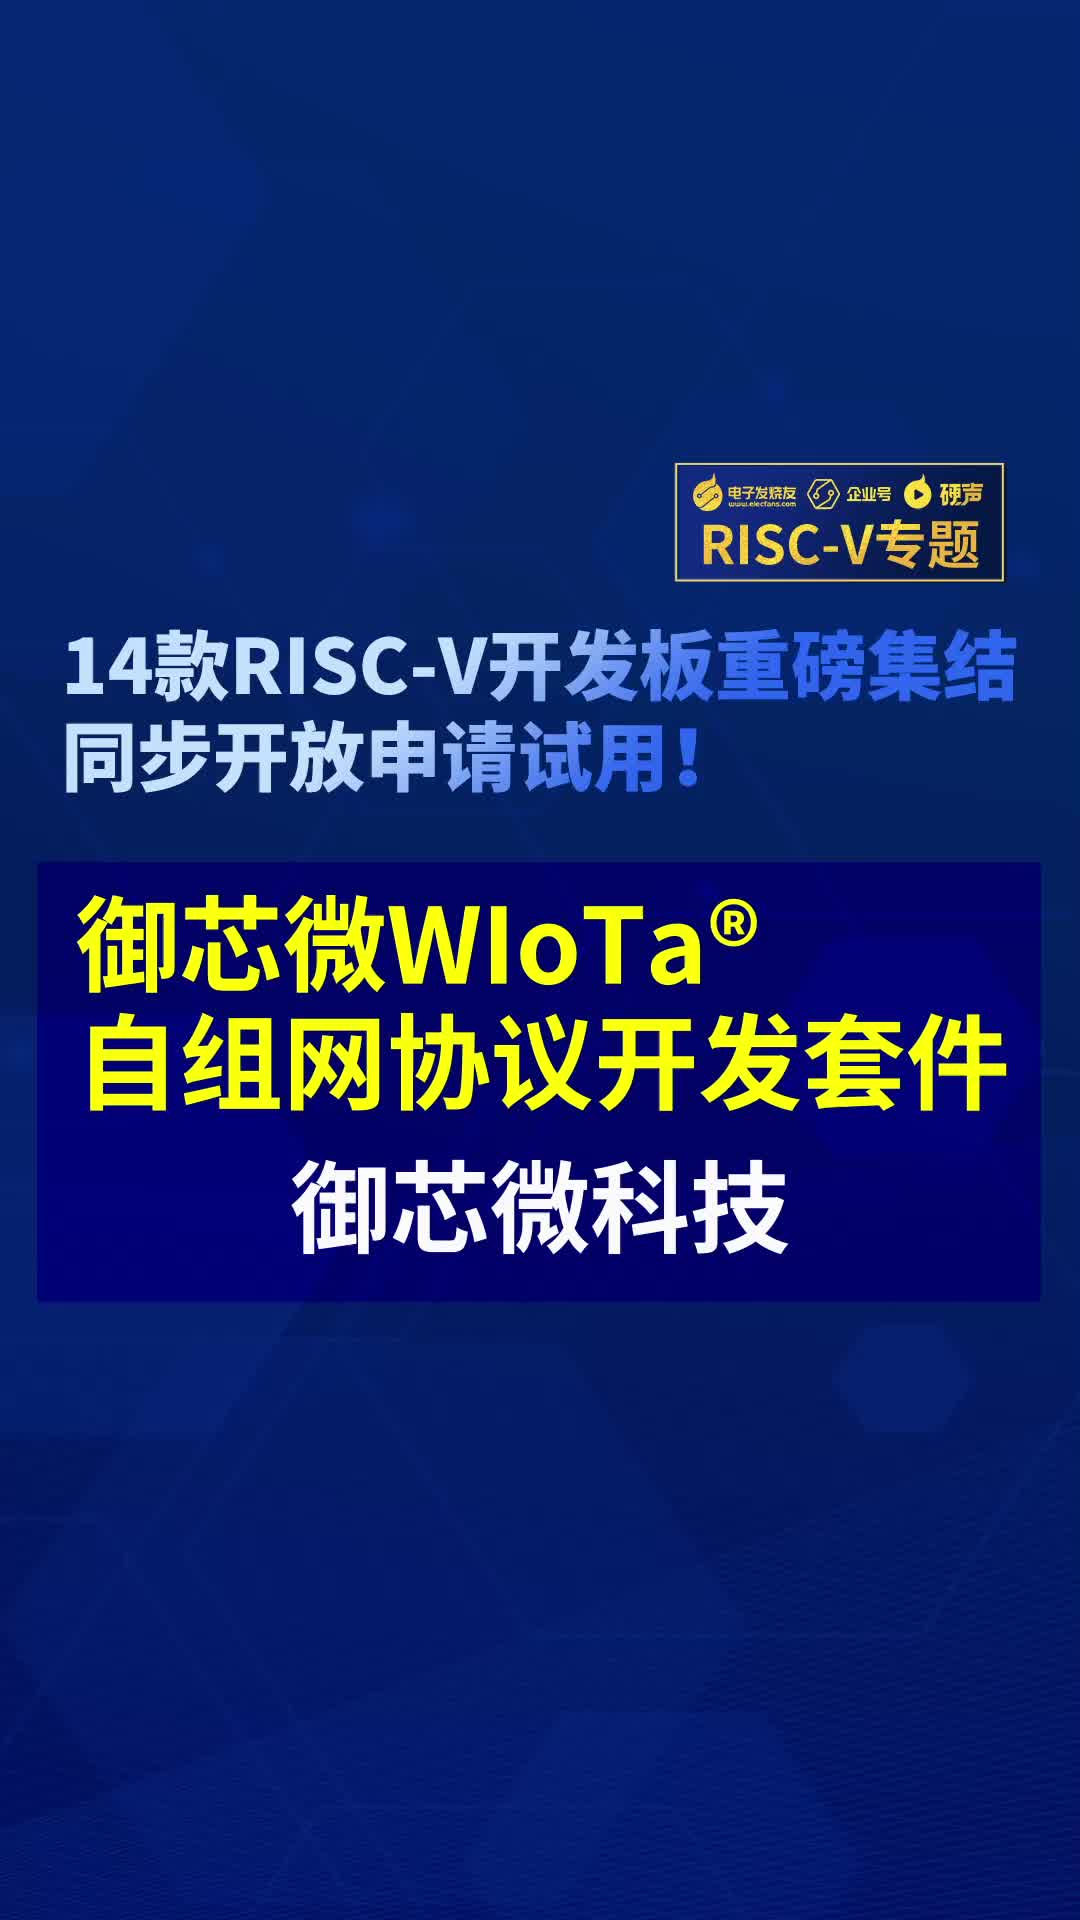 【RISC-V專題】御芯微WIoTa自組網協議開發套件首發試用#RISC-V開發板評測 